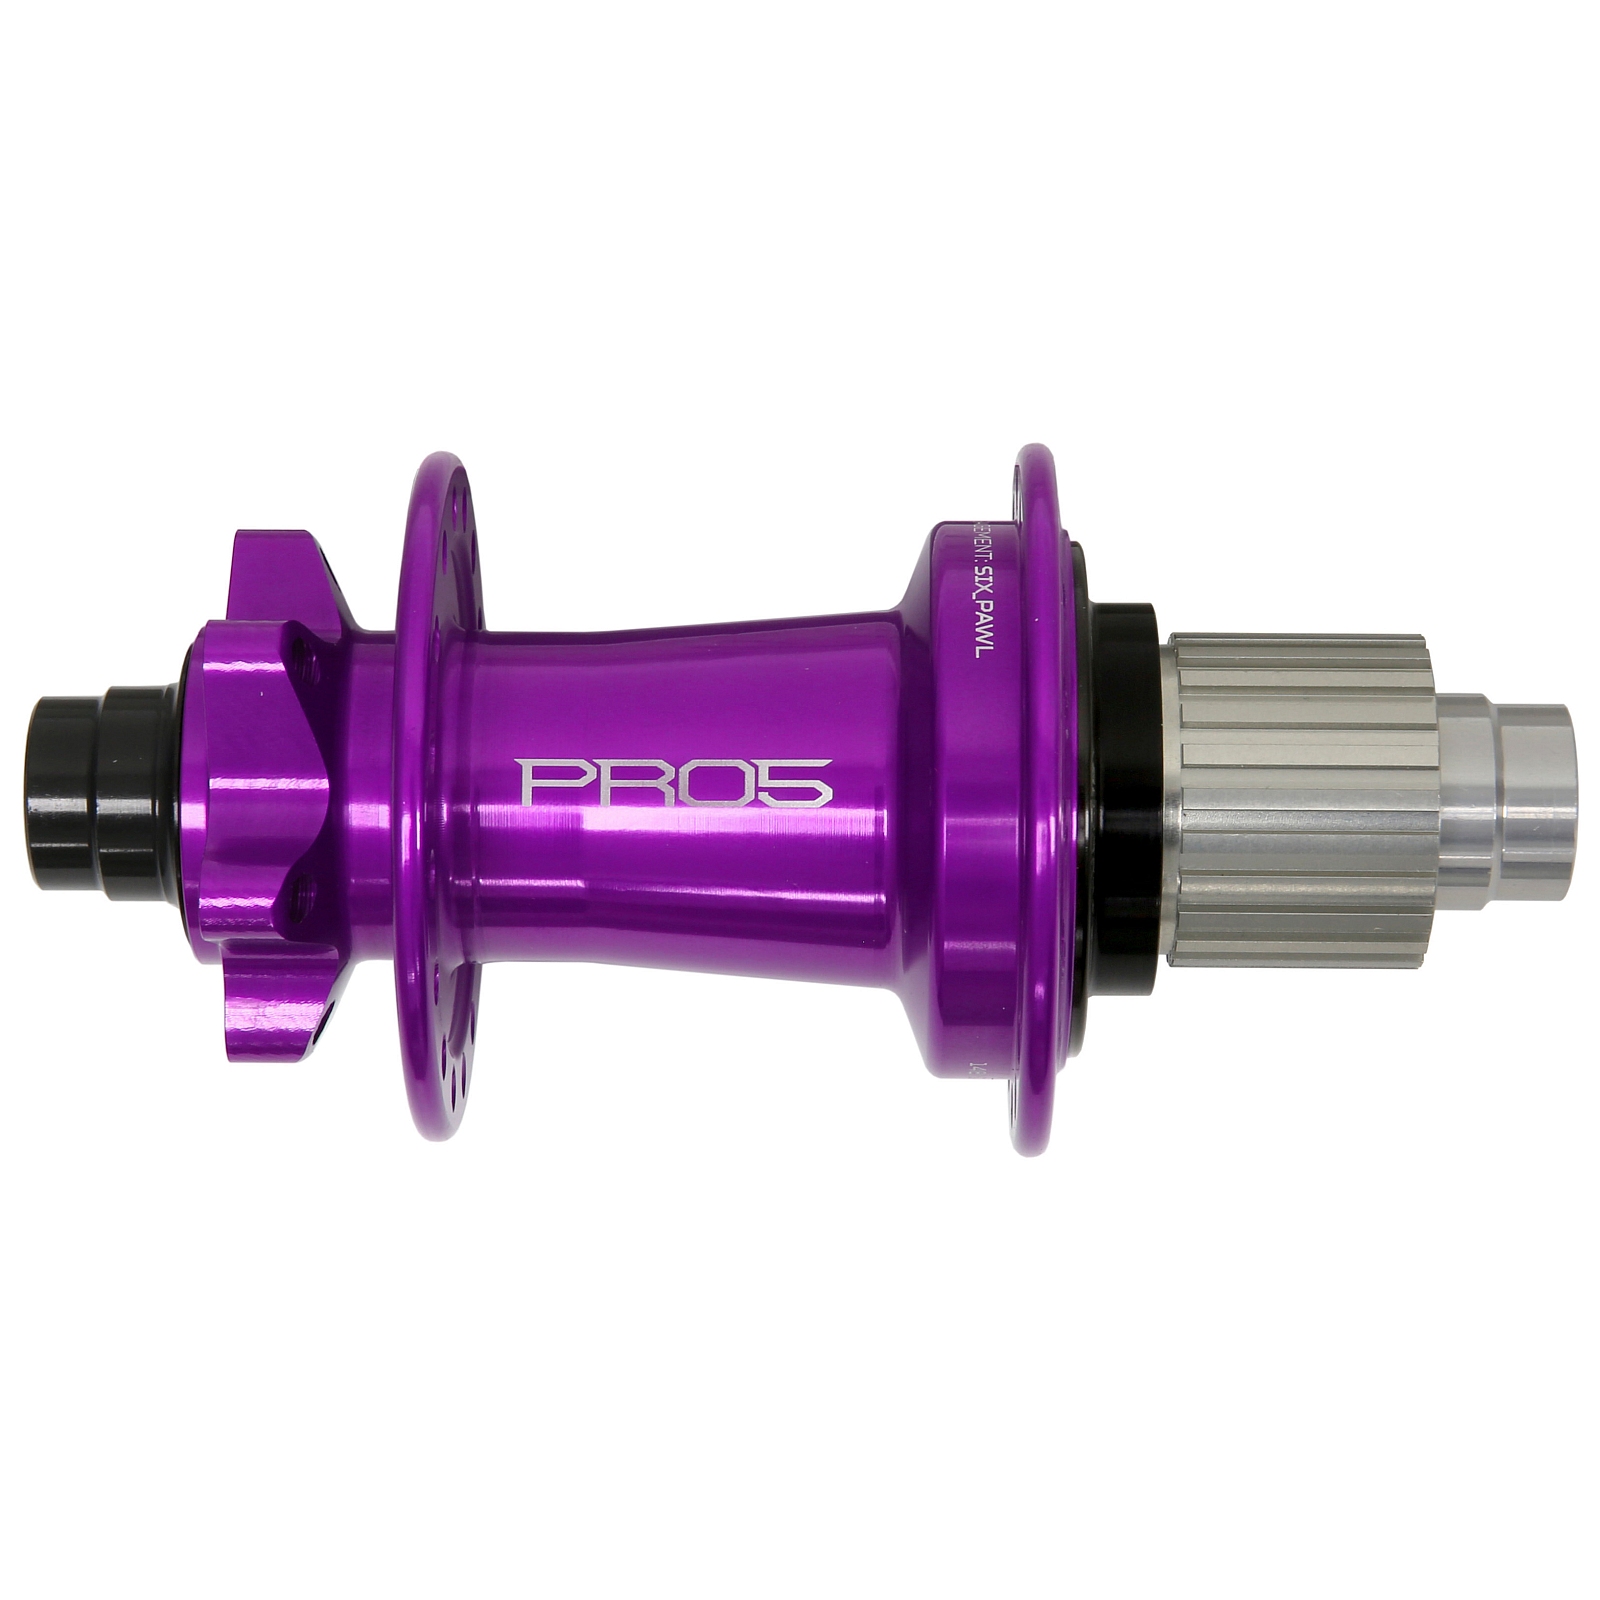 Productfoto van Hope Pro 5 Achterwielnaaf - 6-Bolt - 12x148mm Boost | Shimano Micro Spline - paars